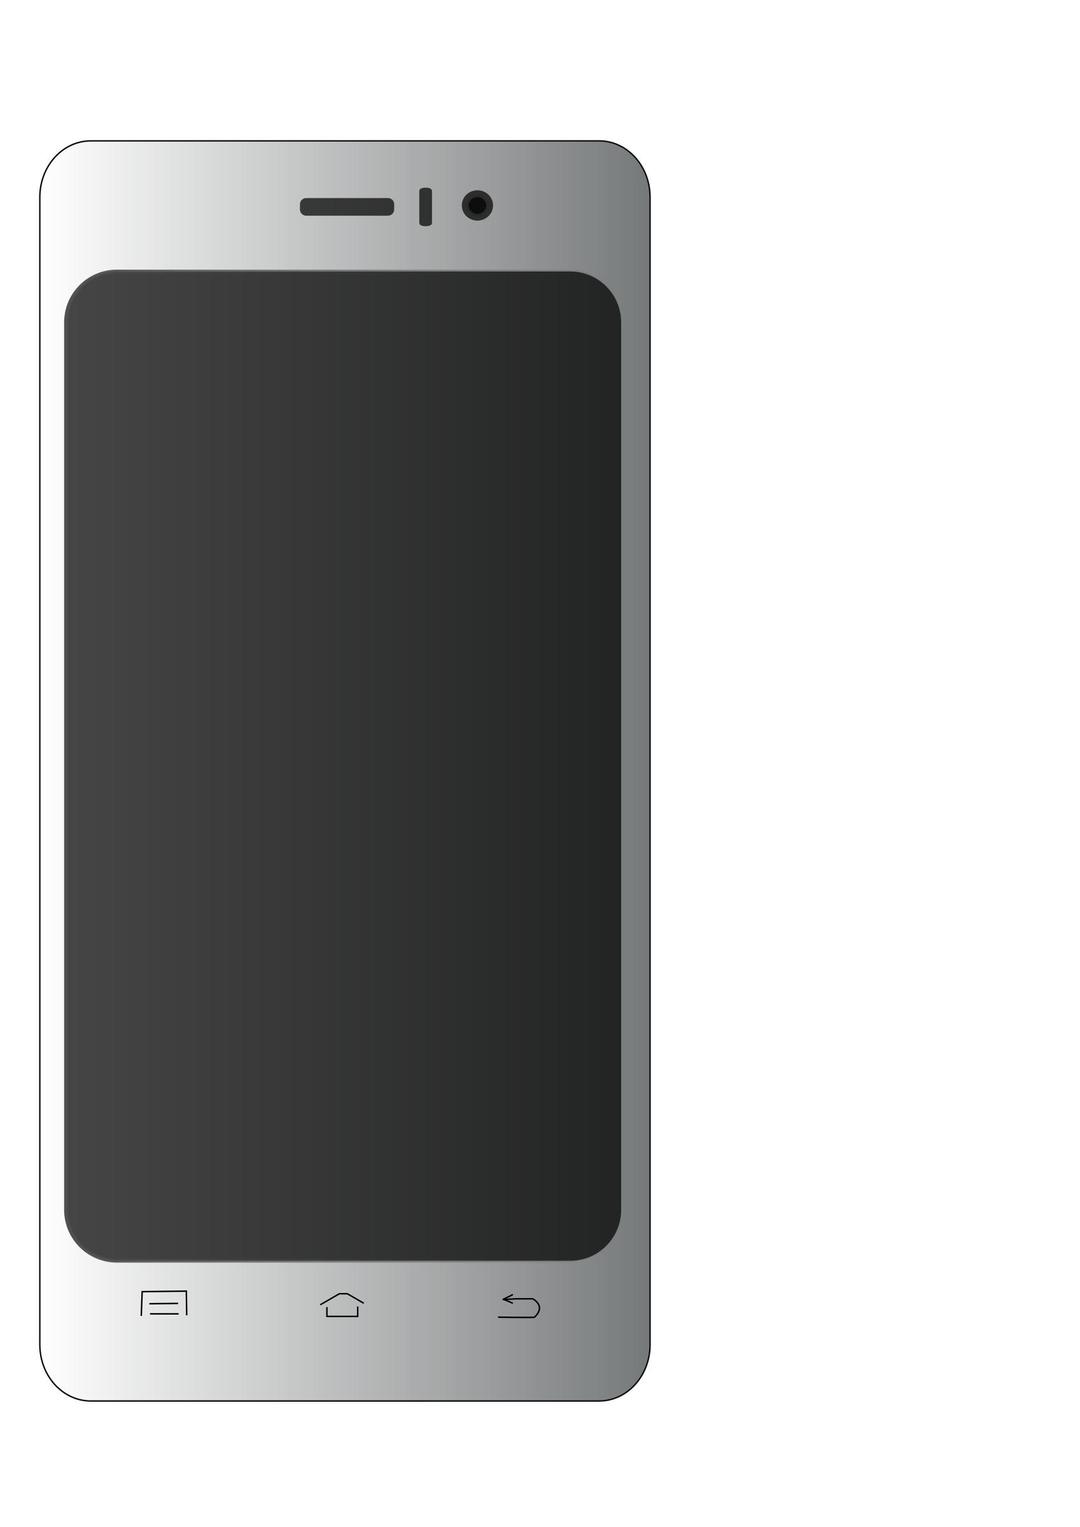 Unbranded mobile phone - smartphone png transparent